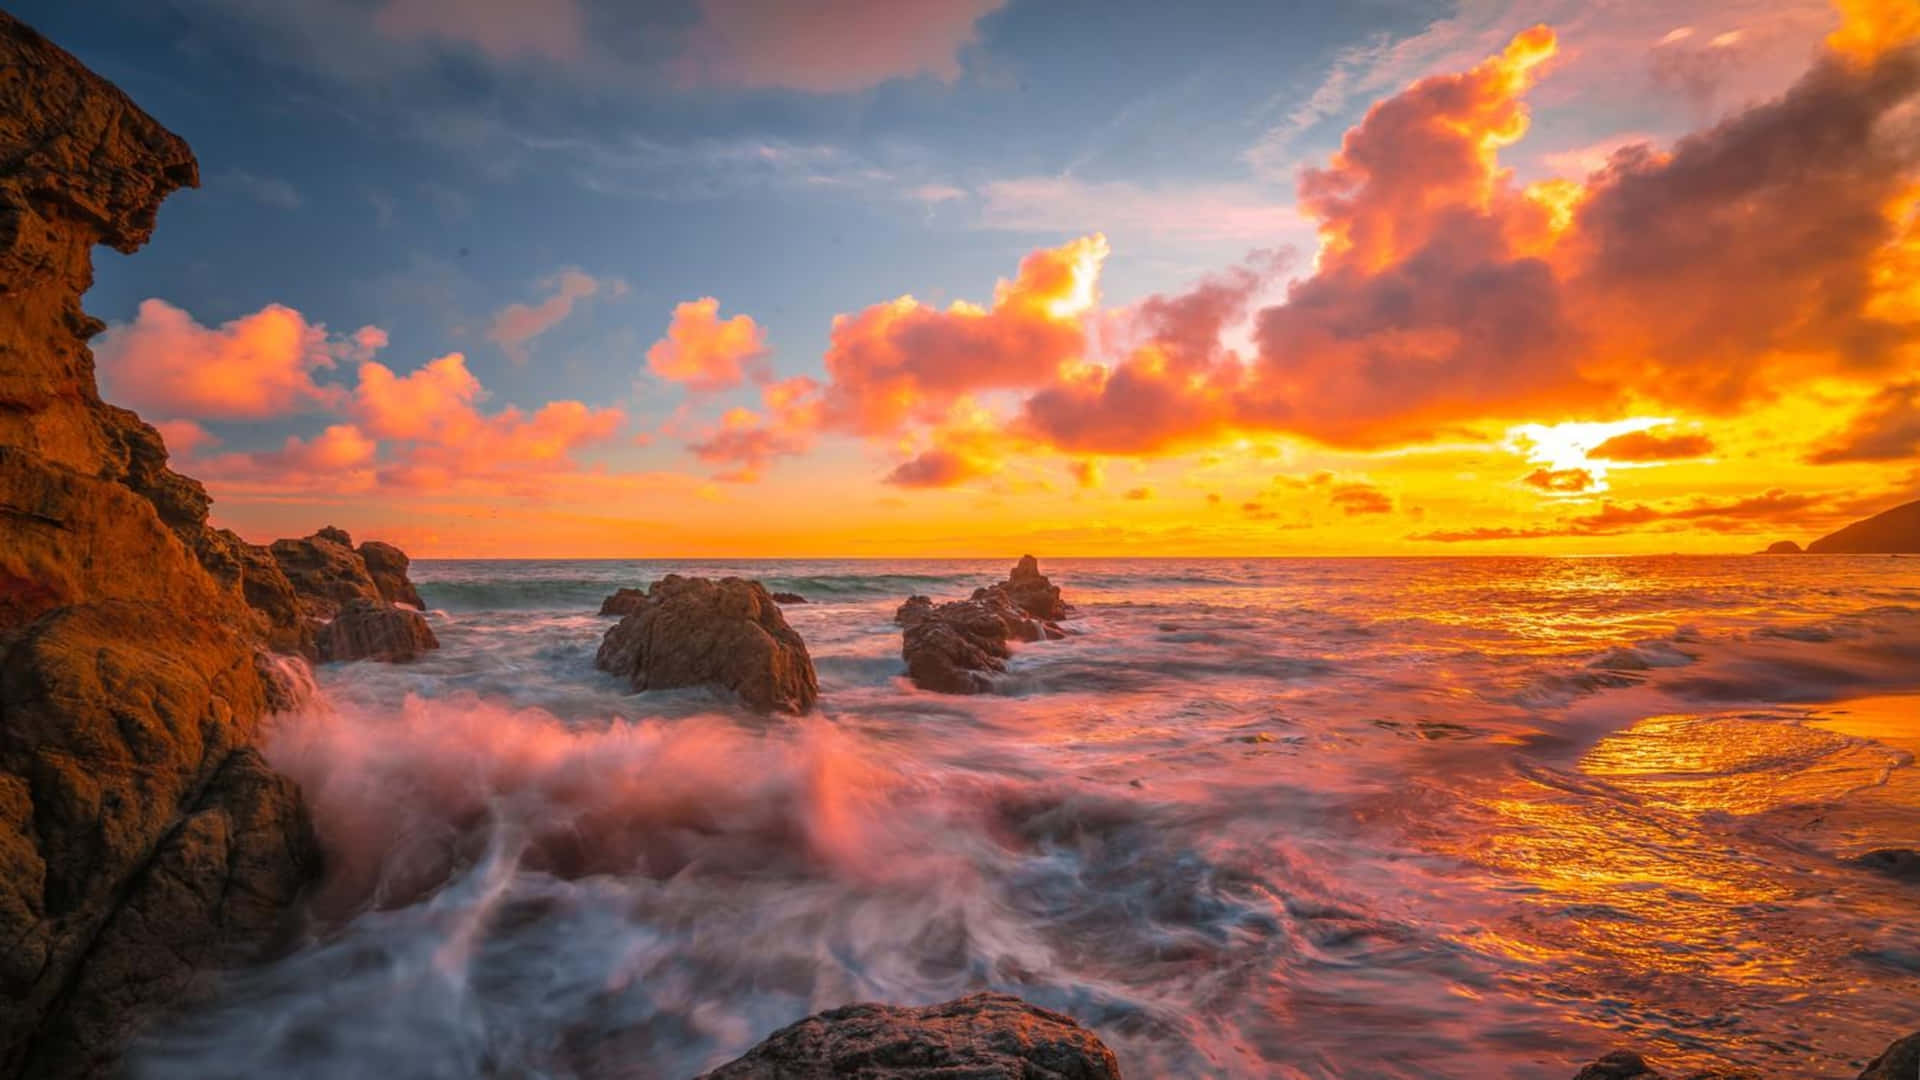 1440p Malibu Sunset Wave Background